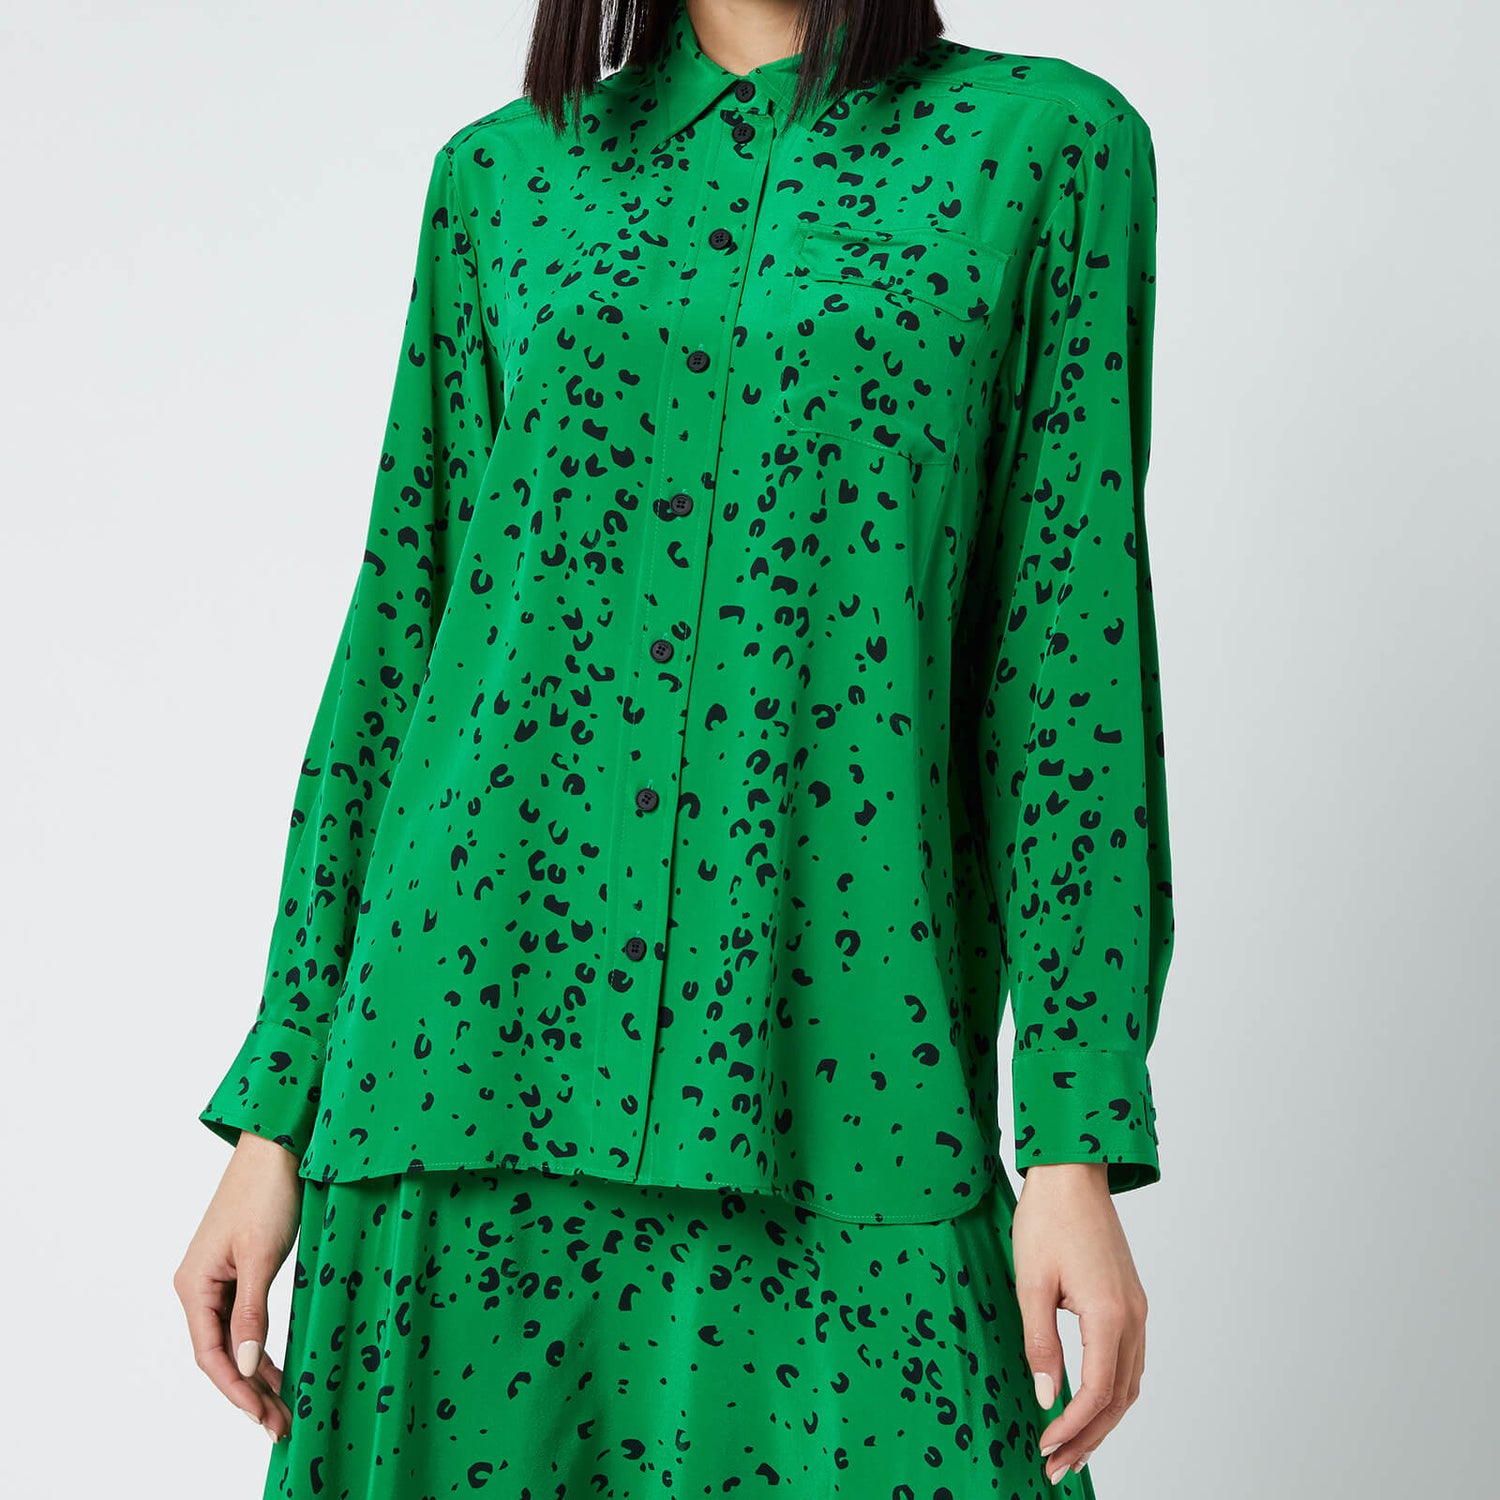 KENZO Women's Printed Soft Shirt - Green